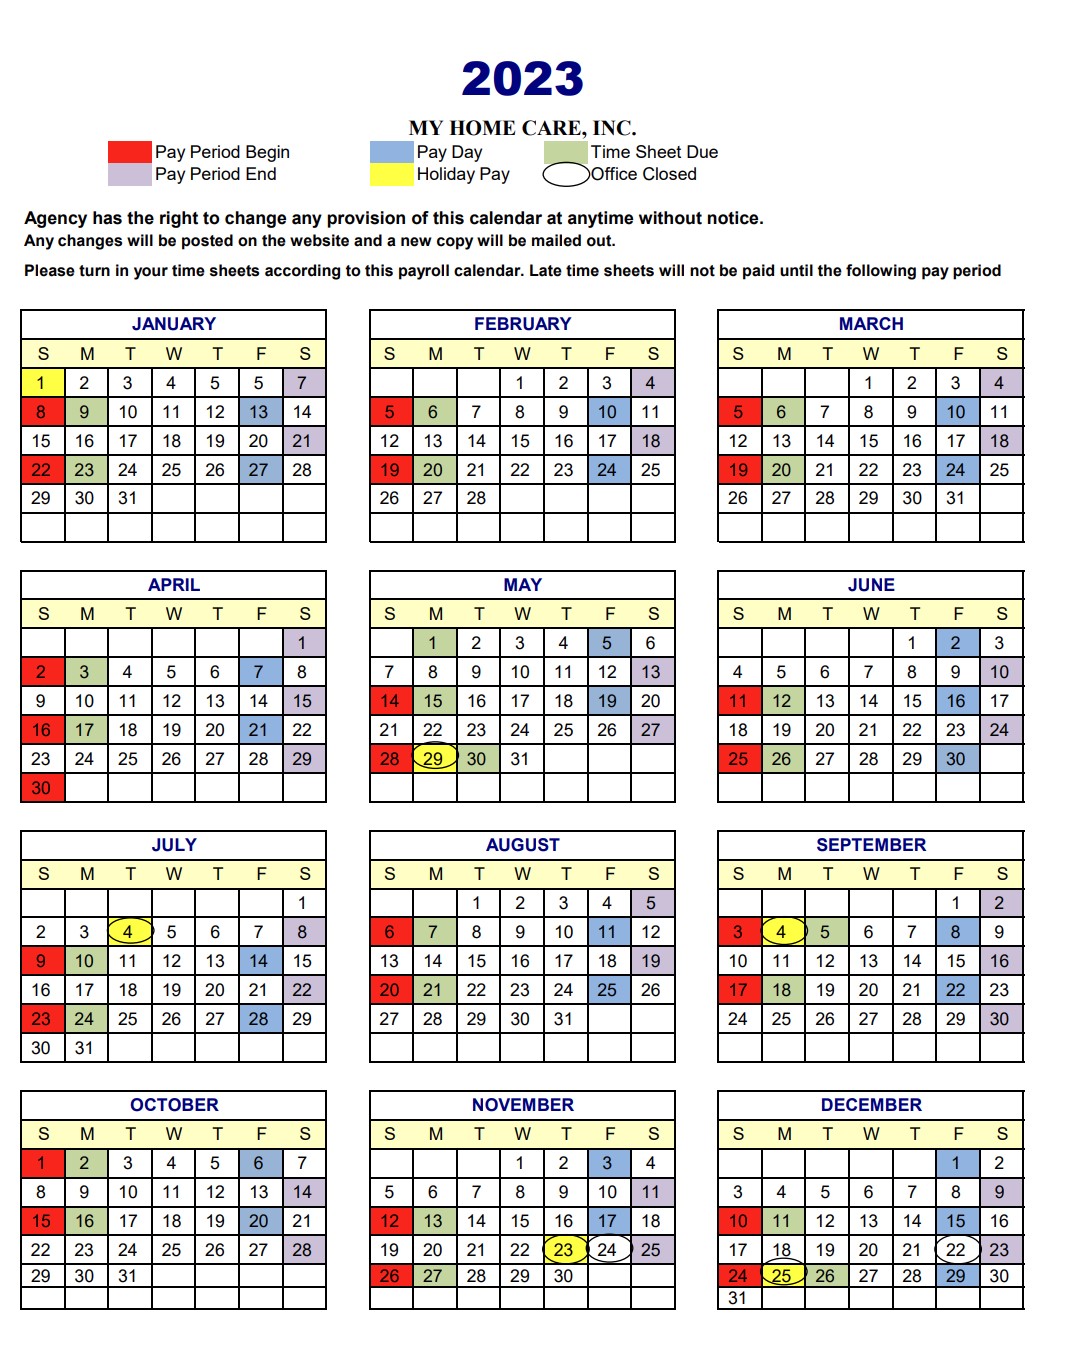 2023 Payroll Calendar My Home Care, Inc.